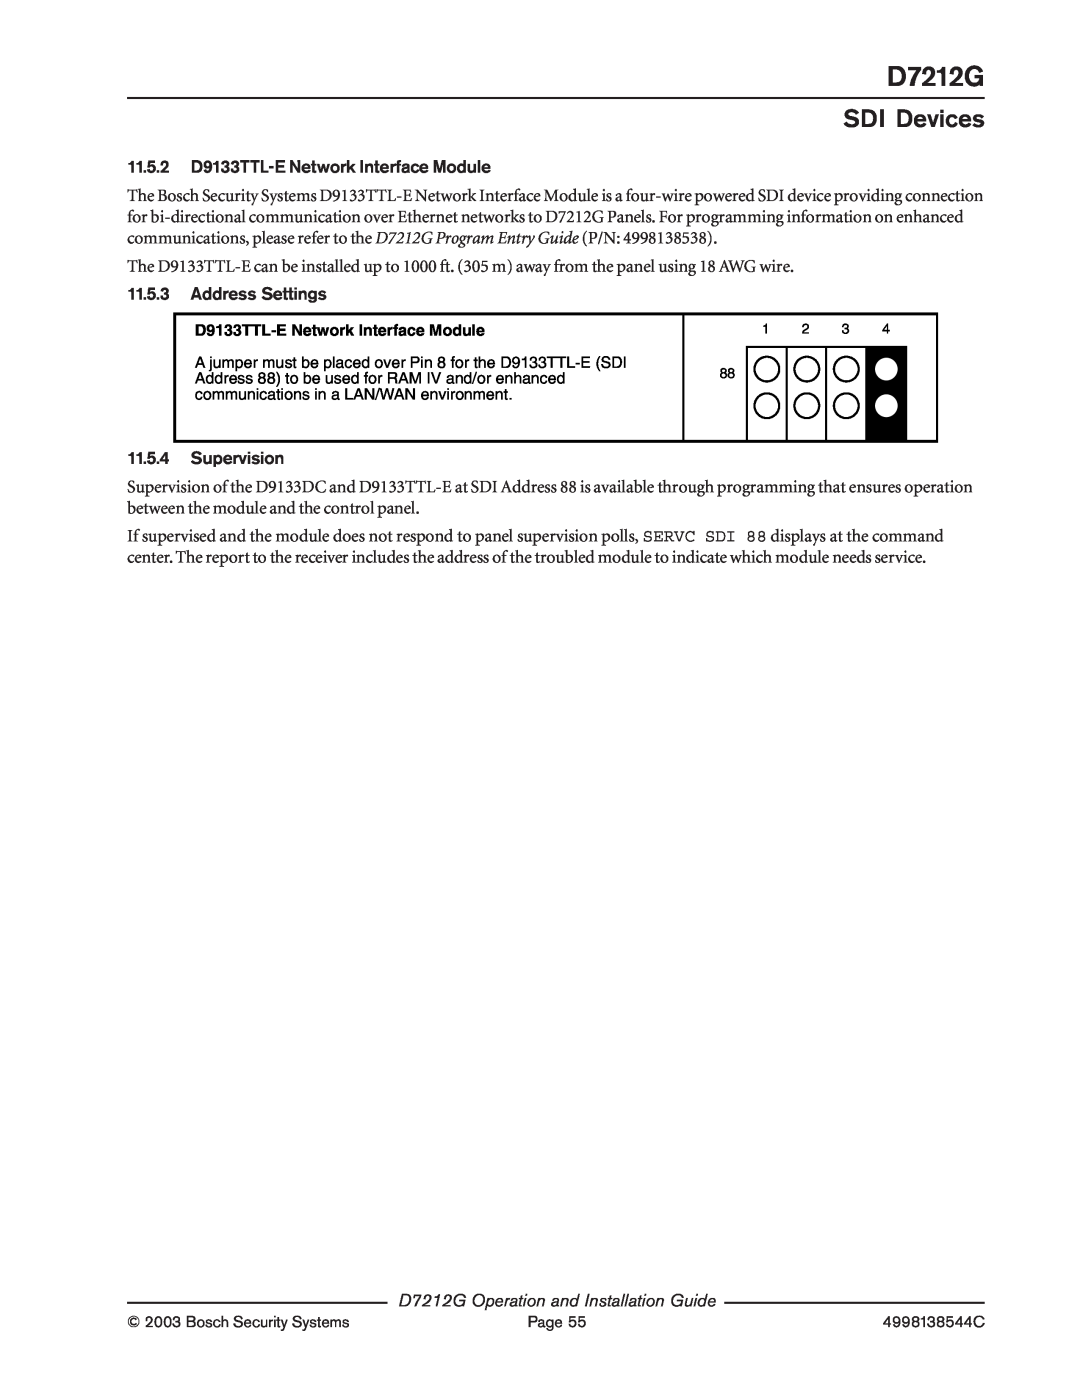 Bosch Appliances D7212G 11.5.2D9133TTL-ENetwork Interface Module, 11.5.3Address Settings, 11.5.4Supervision, SDI Devices 